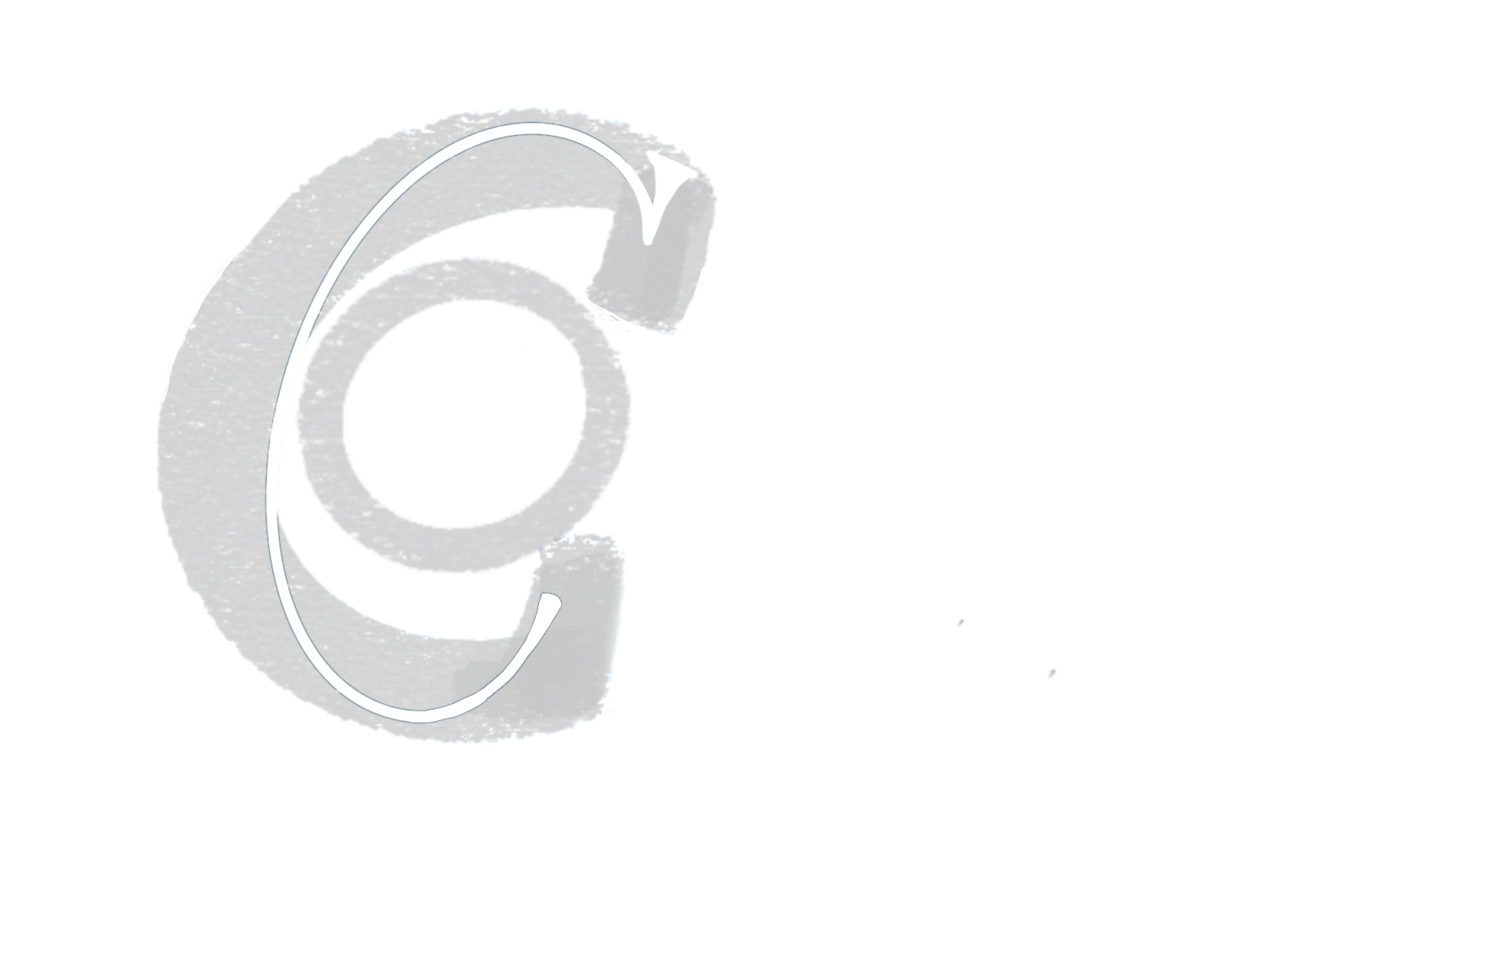 Casalinova Photography